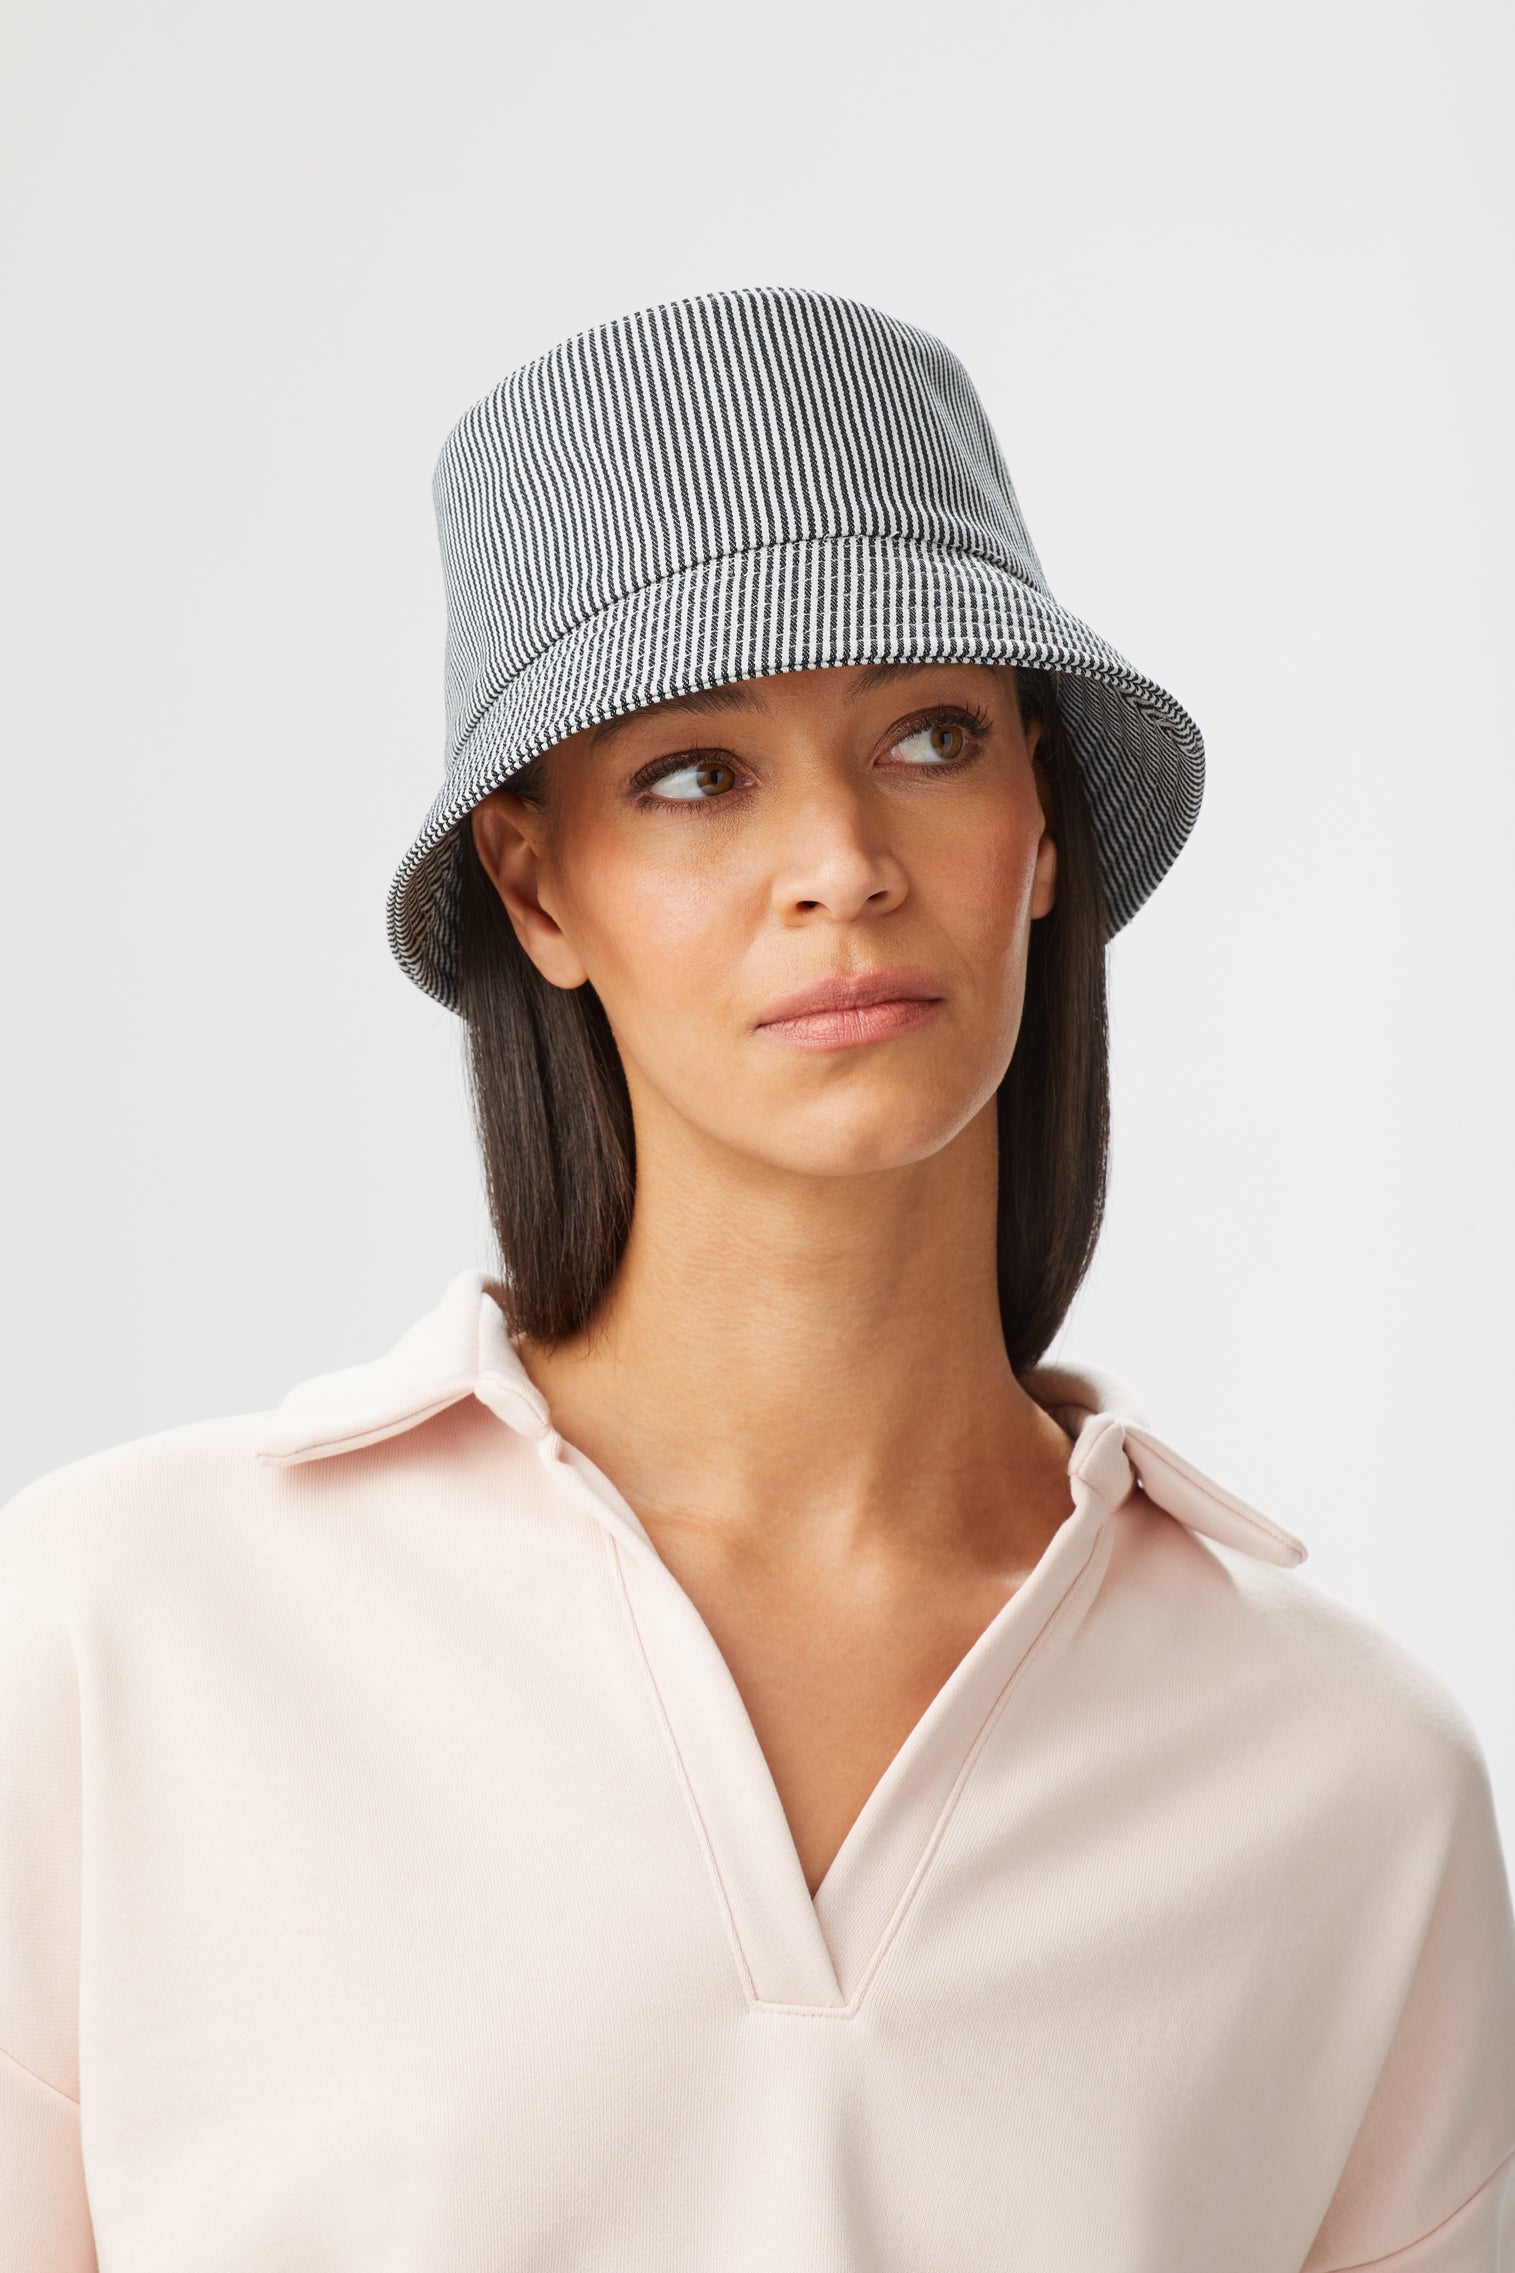 Rye Striped Bucket Hat - Panamas, Straw and Sun Hats for Men - Lock & Co. Hatters London UK